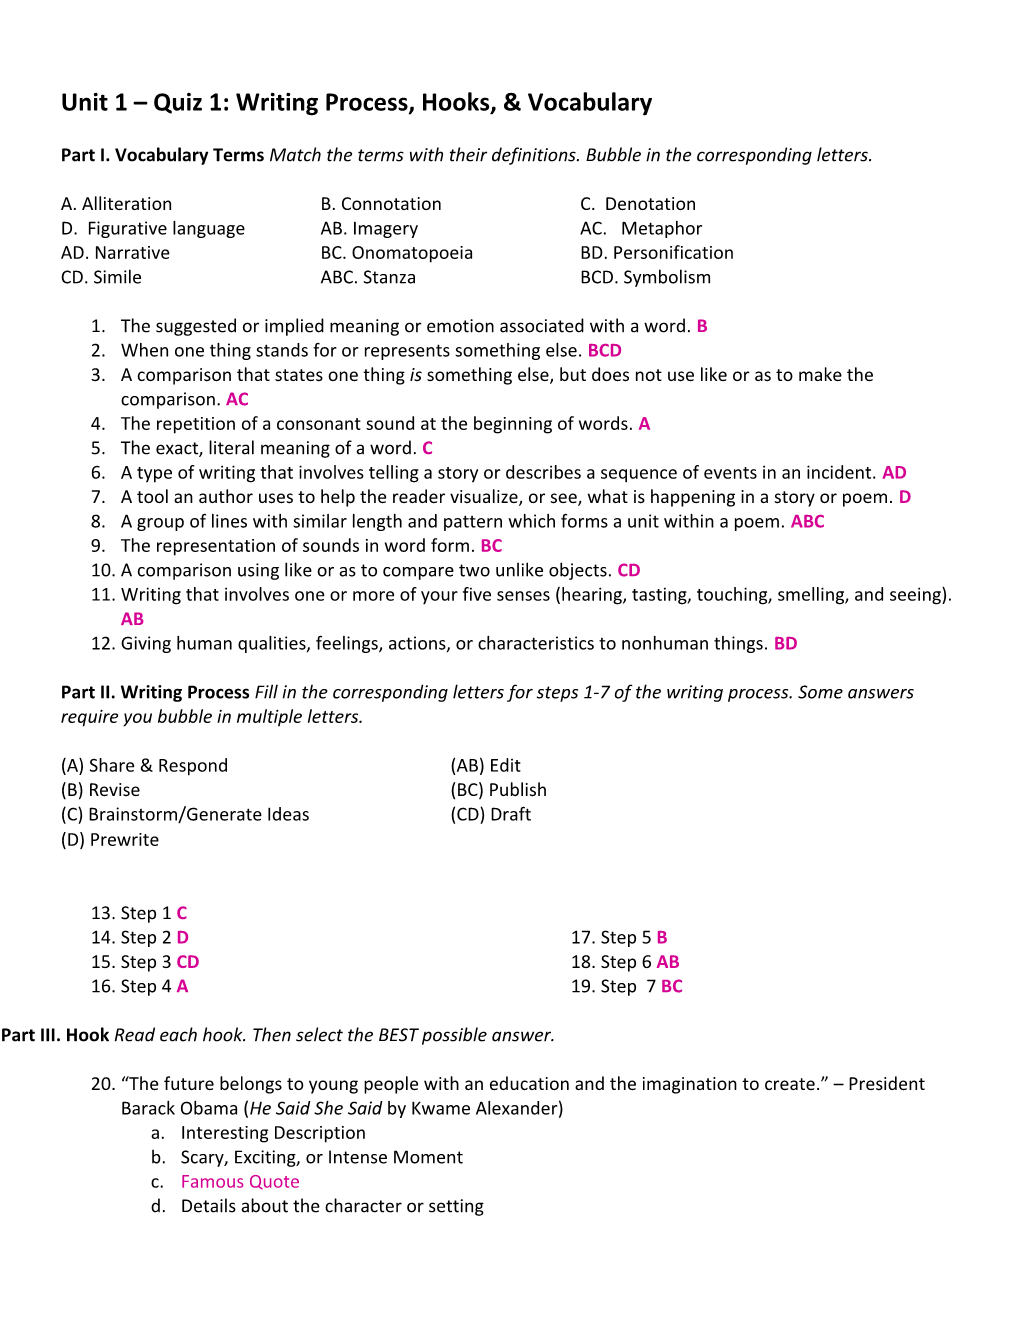 Unit 1 Quiz 1: Writing Process, Hooks, & Vocabulary